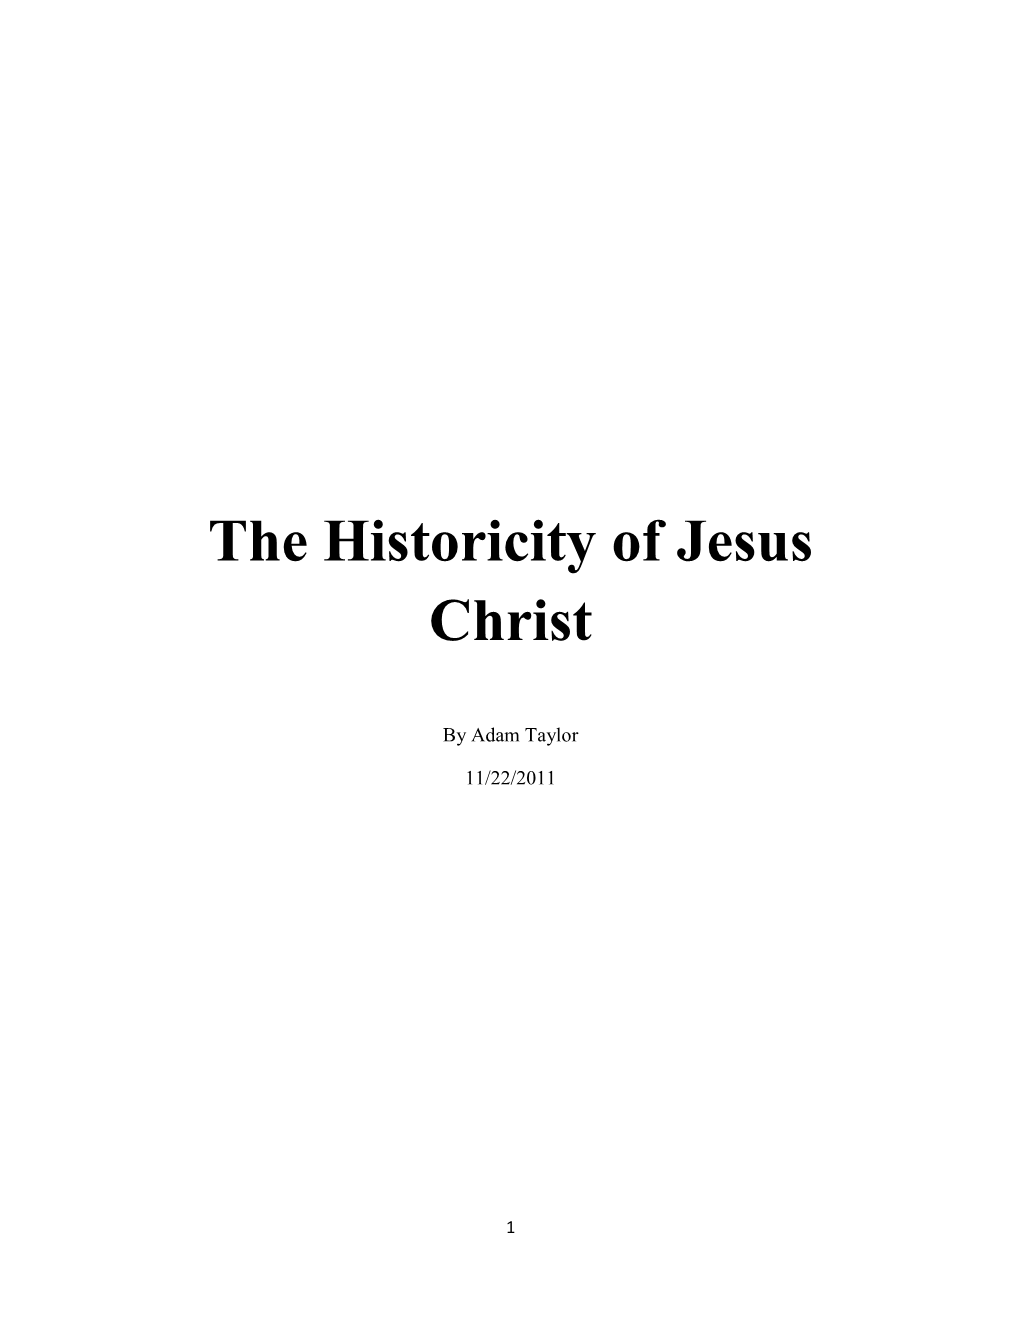 The Historicity of Jesus Christ